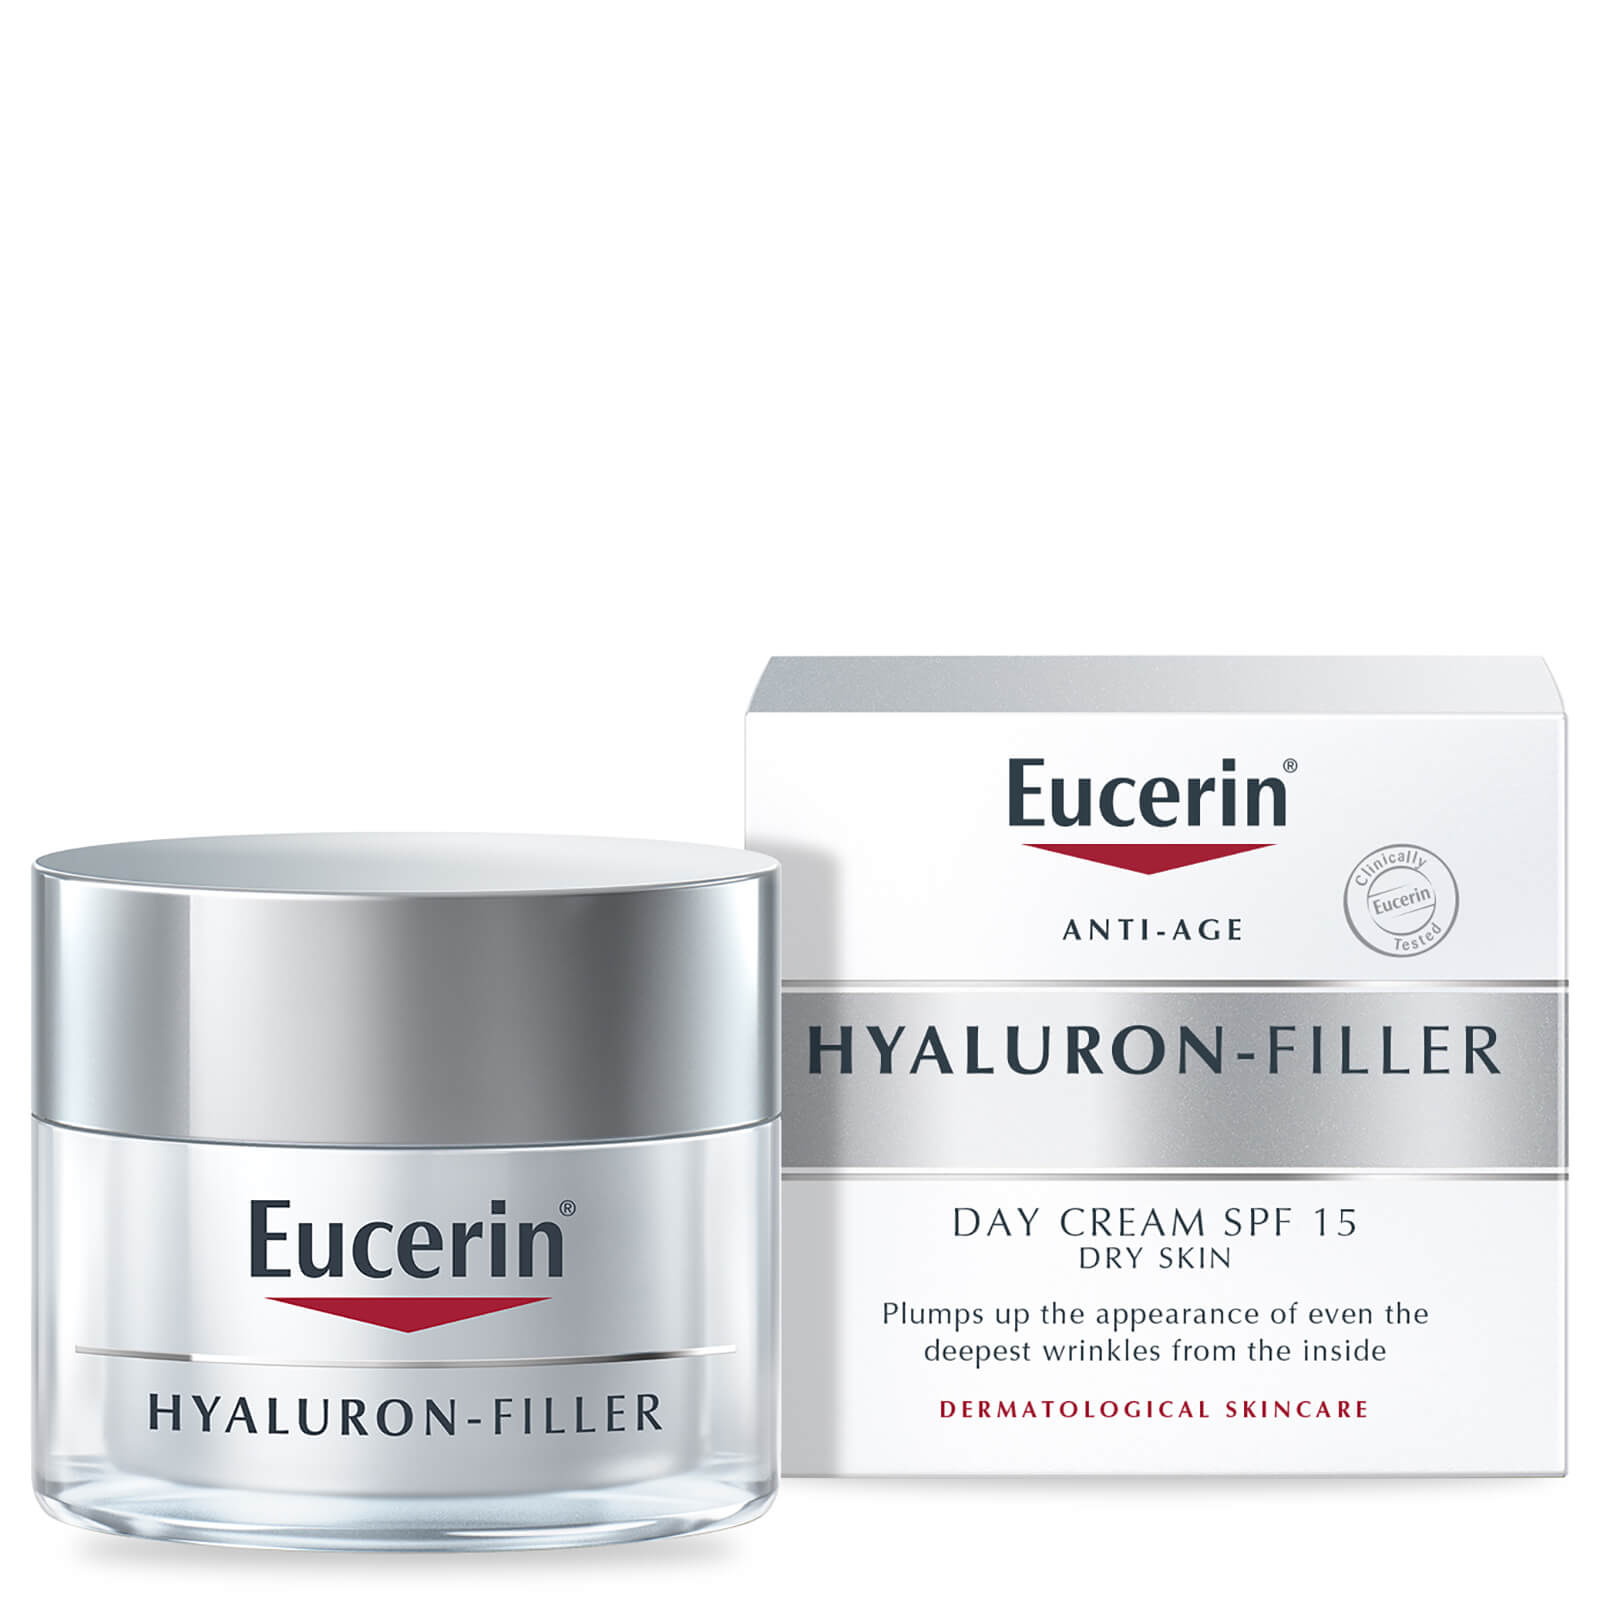 Eucerin(r) Anti-Age Hyaluron-Filler Day Cream for Dry Skin SPF15 + UVA Protection (50ml)